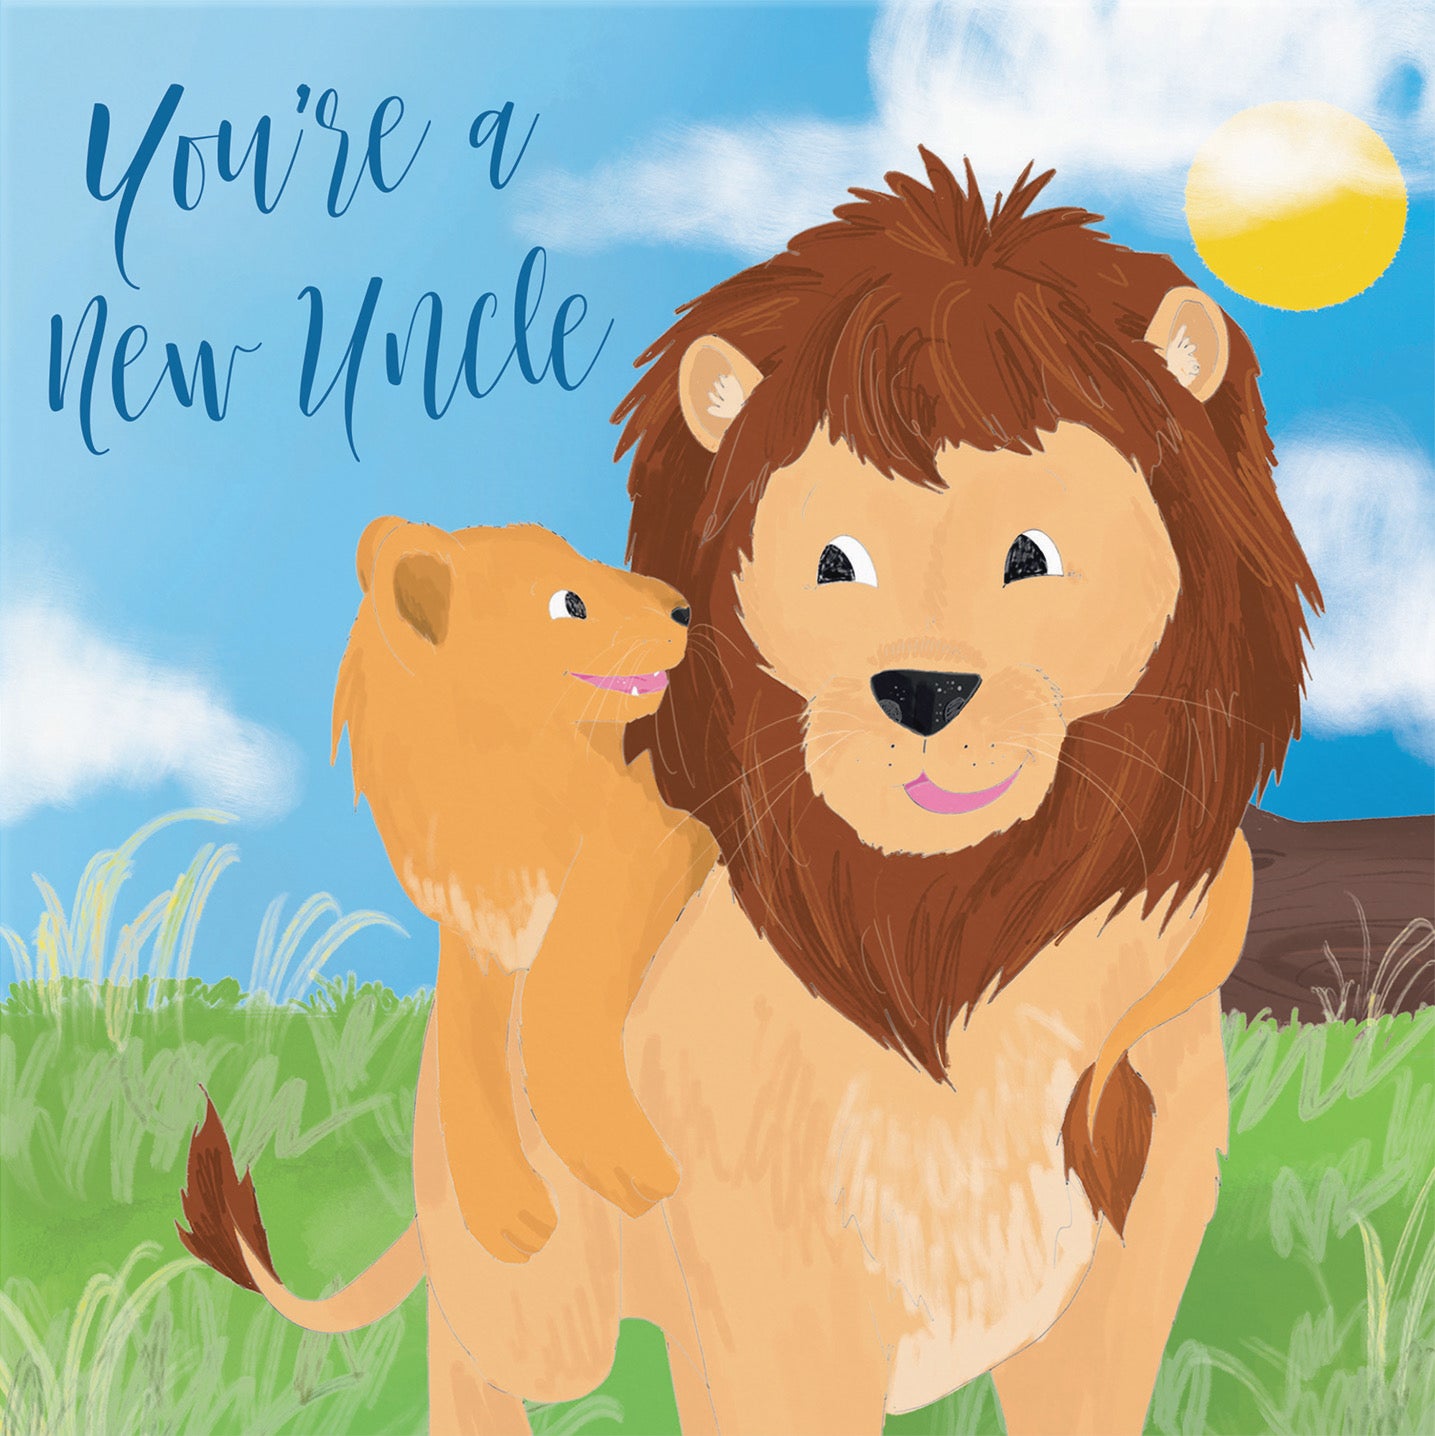 New Uncle Congratulations New Baby Card Cute Lions Jungle - Default Title (B09VMKPXP4)